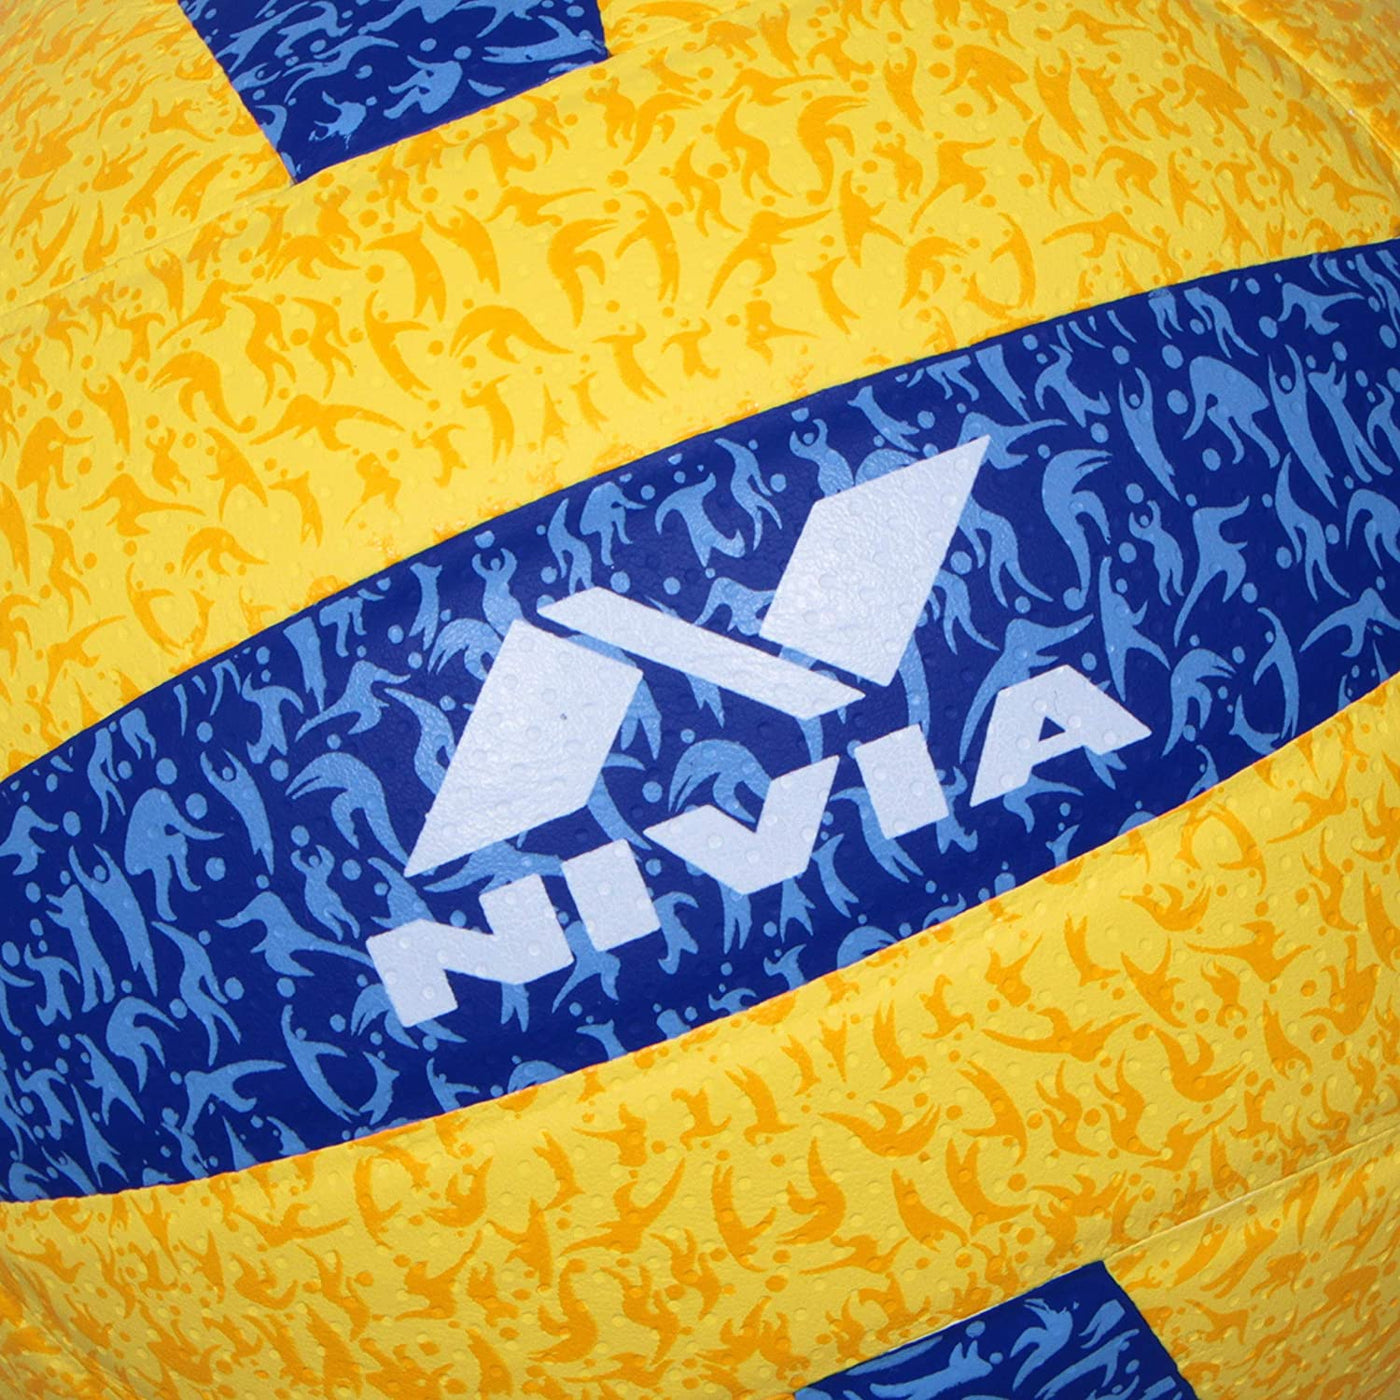 nivia yellow blue volleyball 